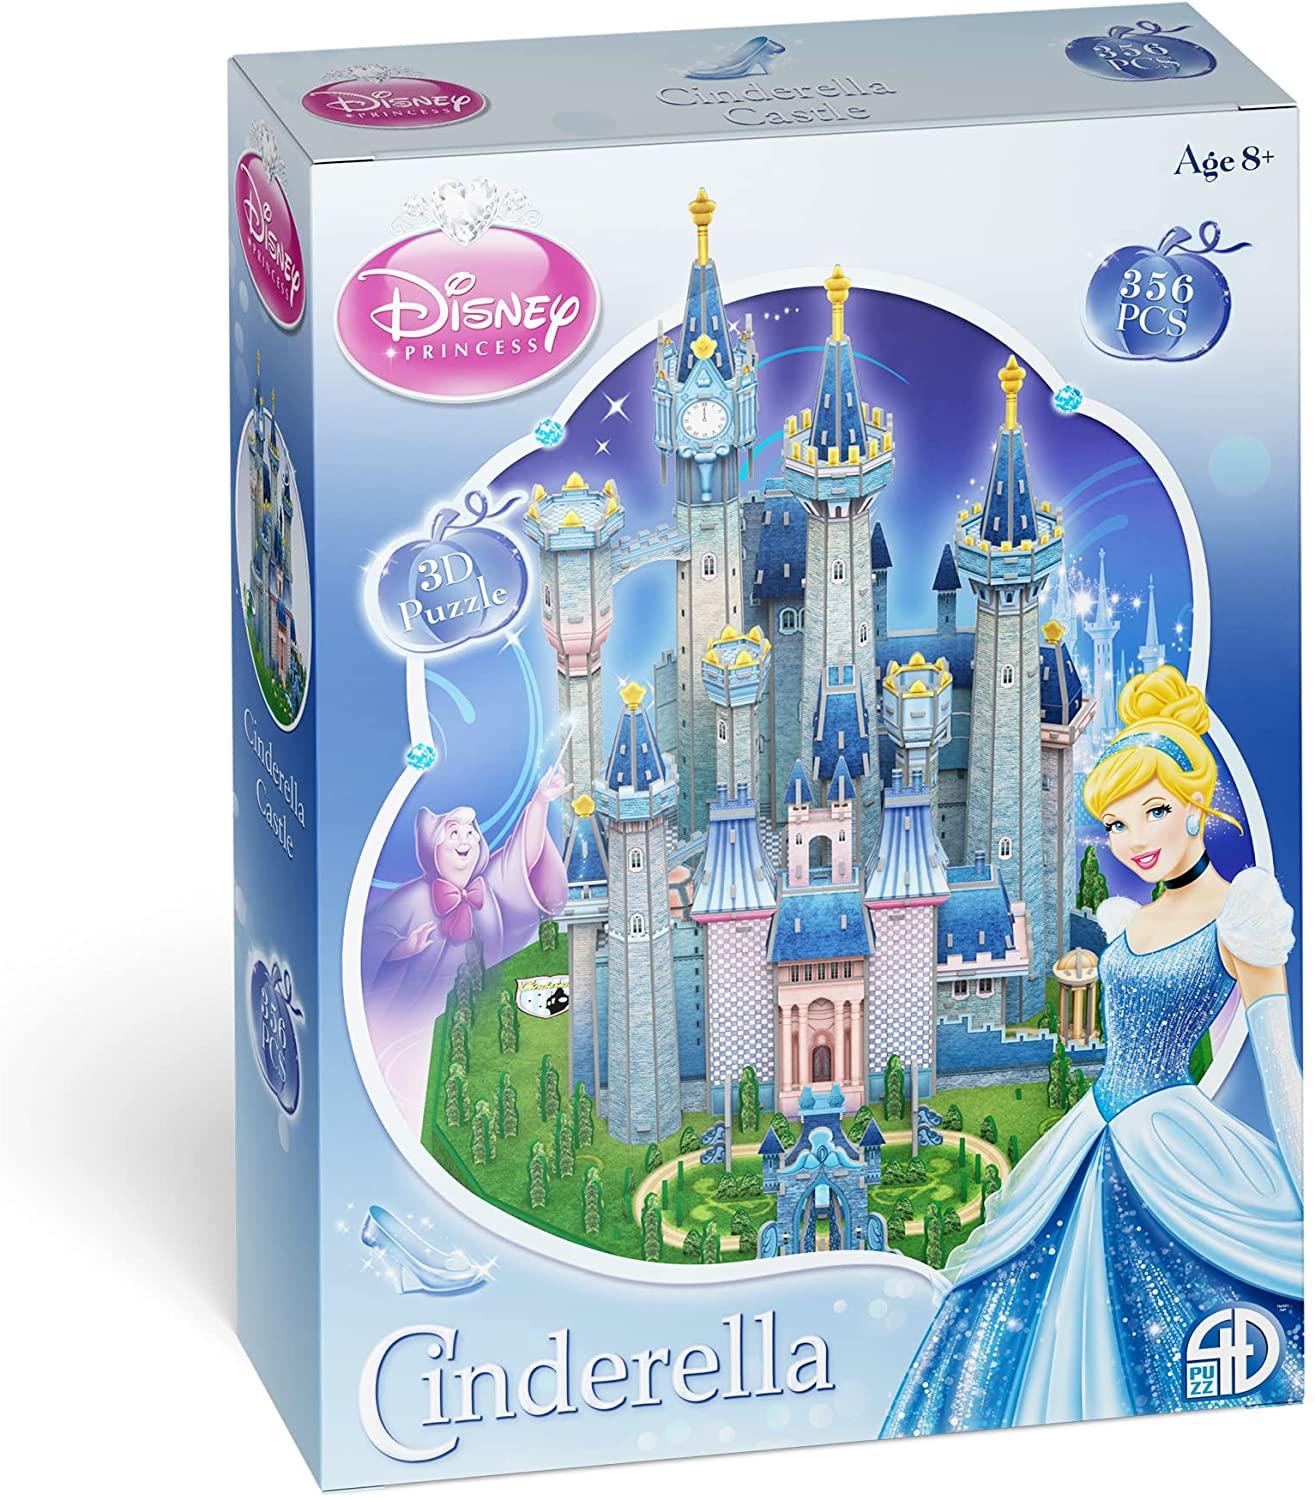 Disney Cinderella Castle 3D Model Puzzle